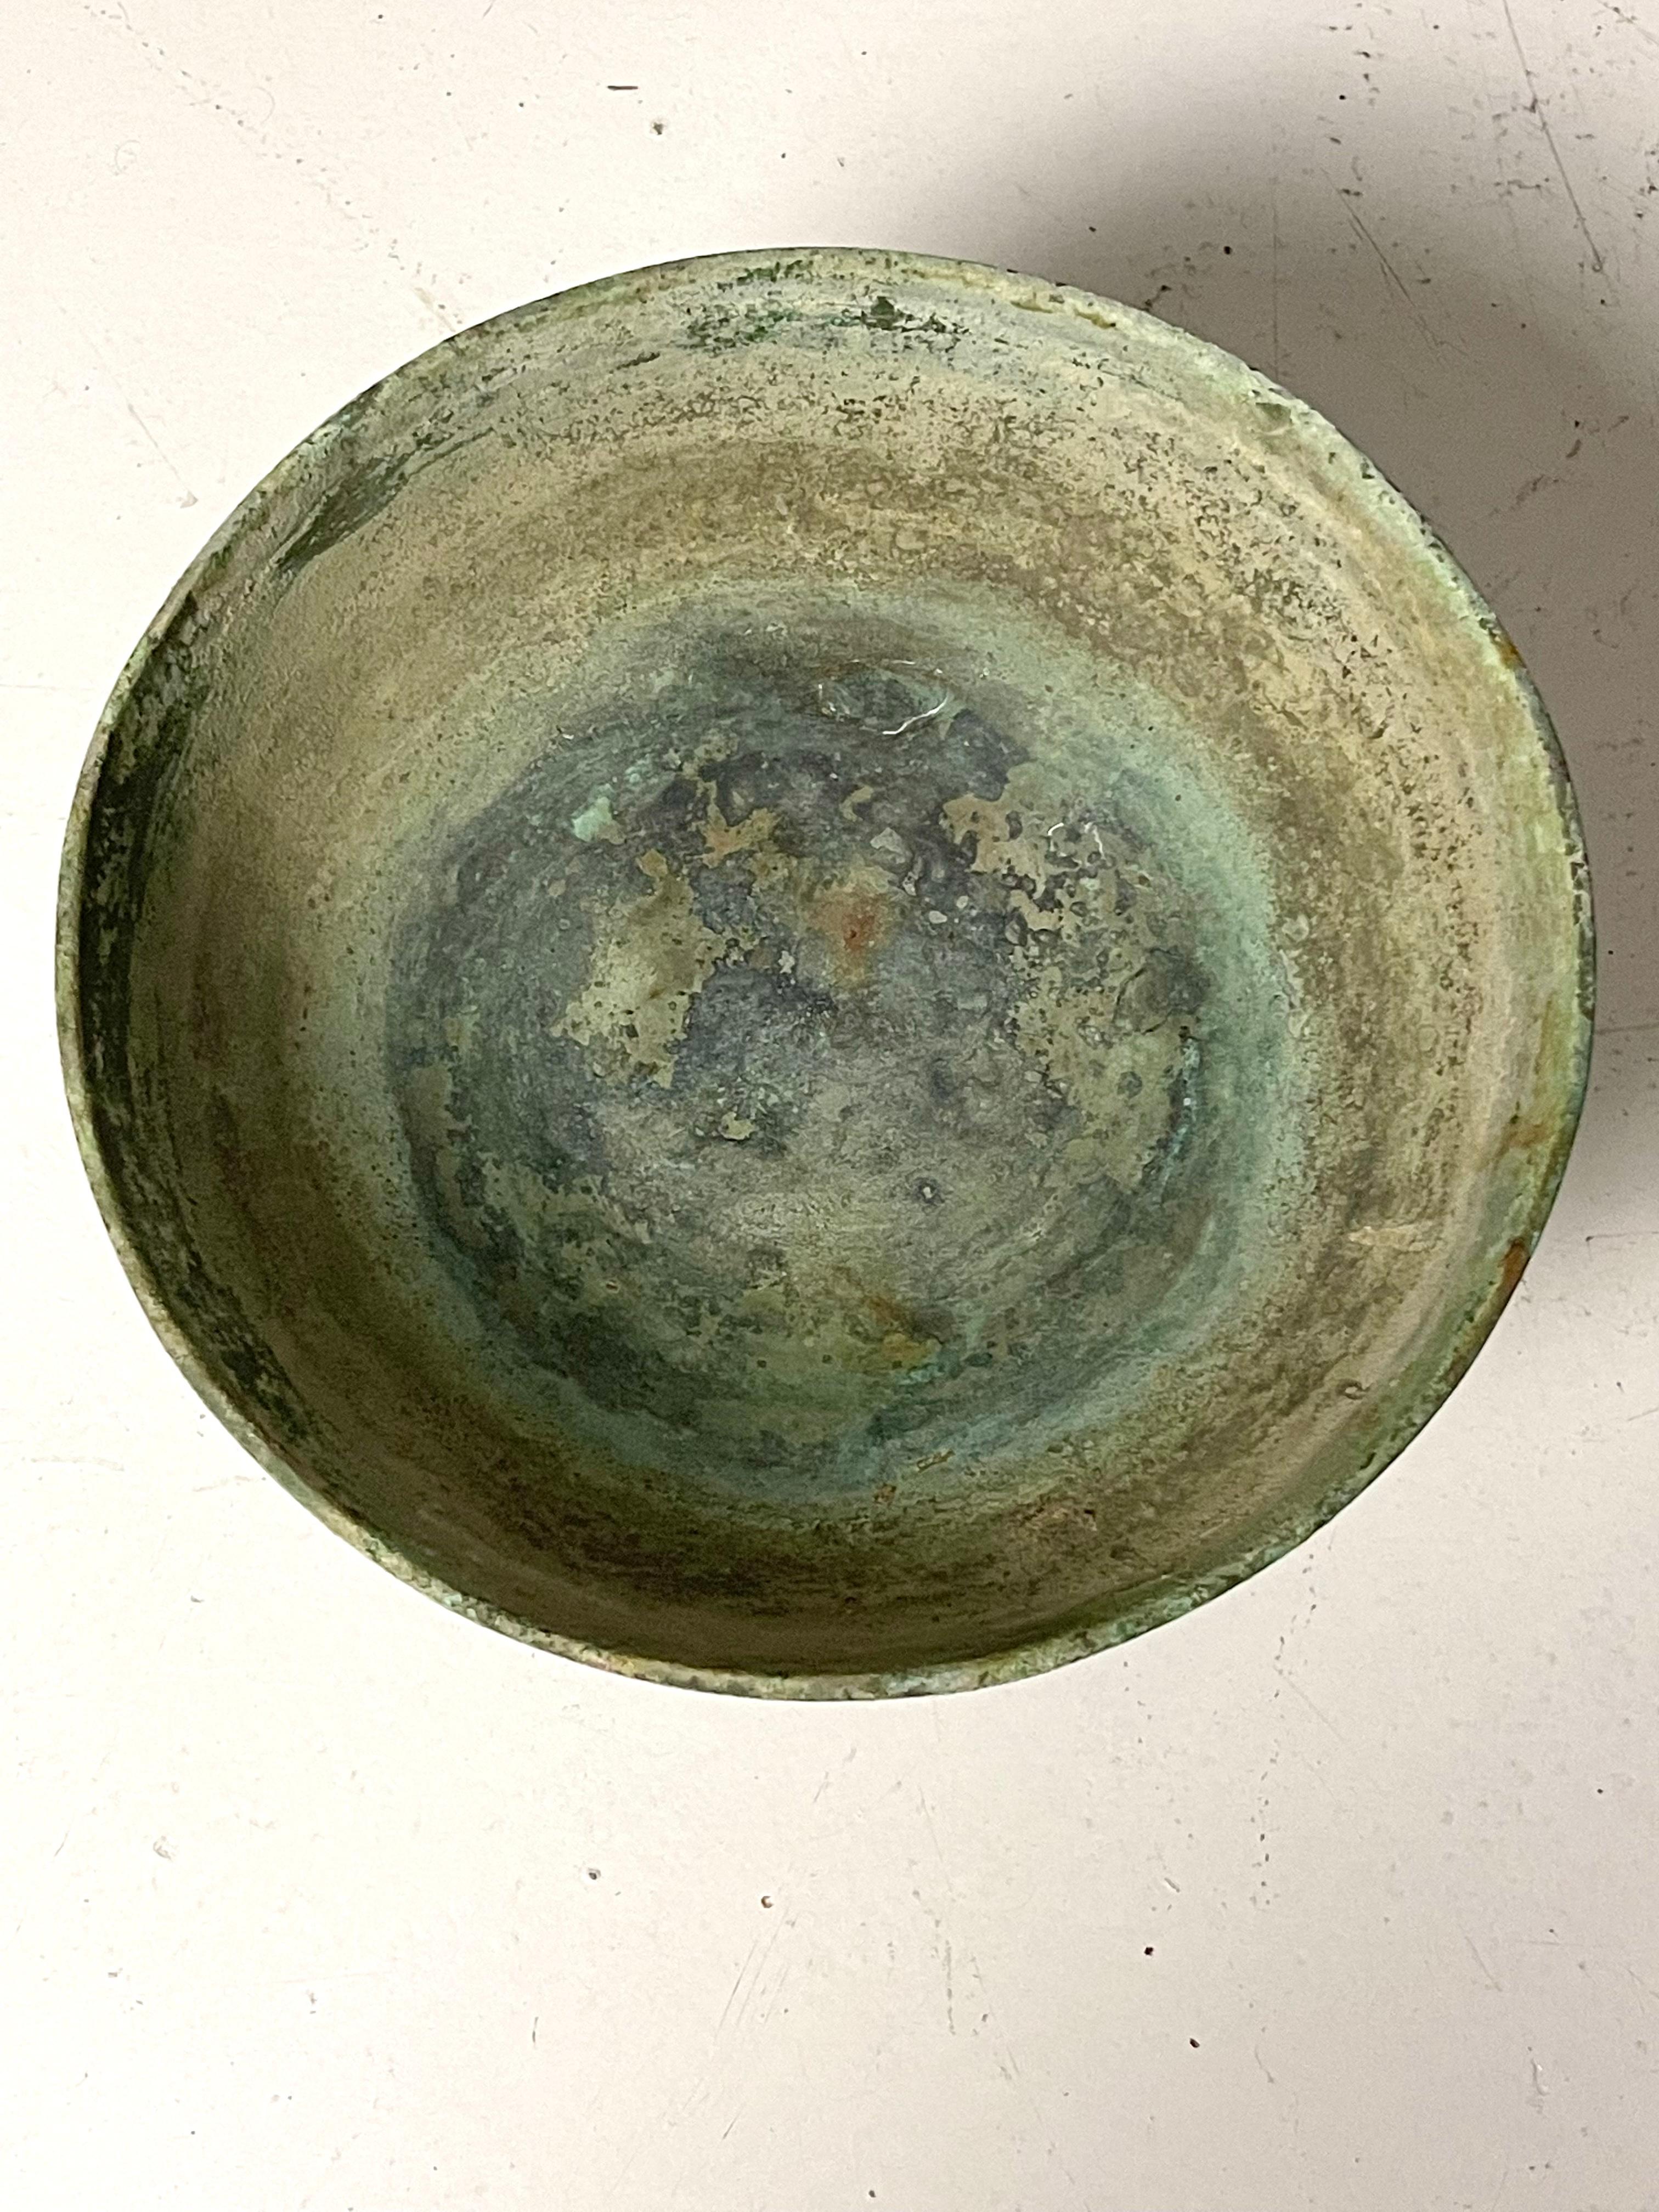 Arts and Crafts Decorative Bowl with Verdigris Patina